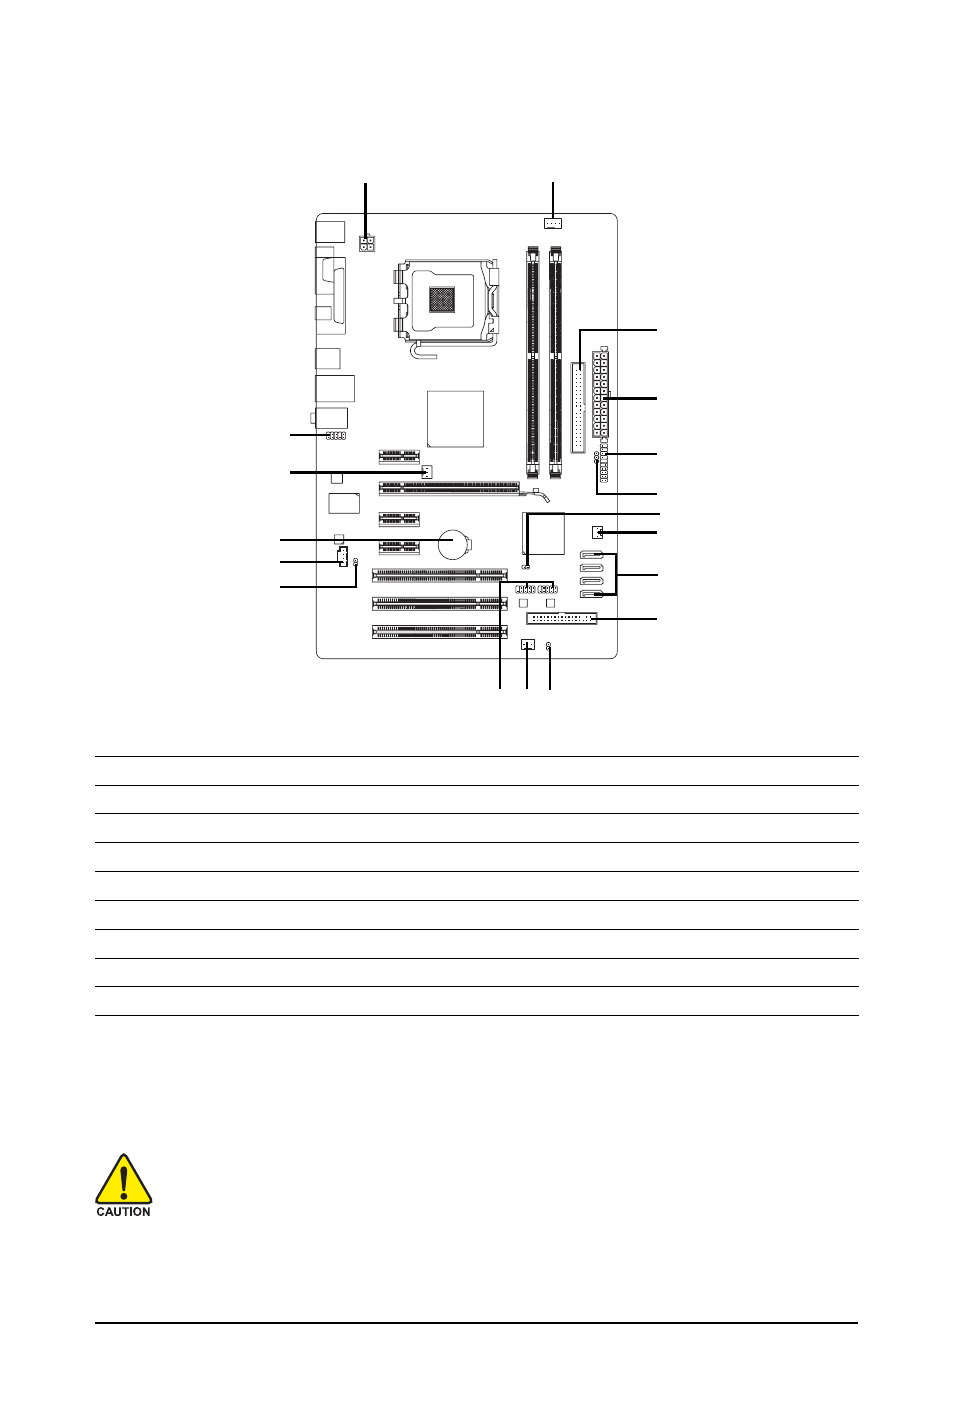 7 internal connectors | GIGABYTE GA-P31-ES3G User Manual | Page 21 / 84 |  Original mode